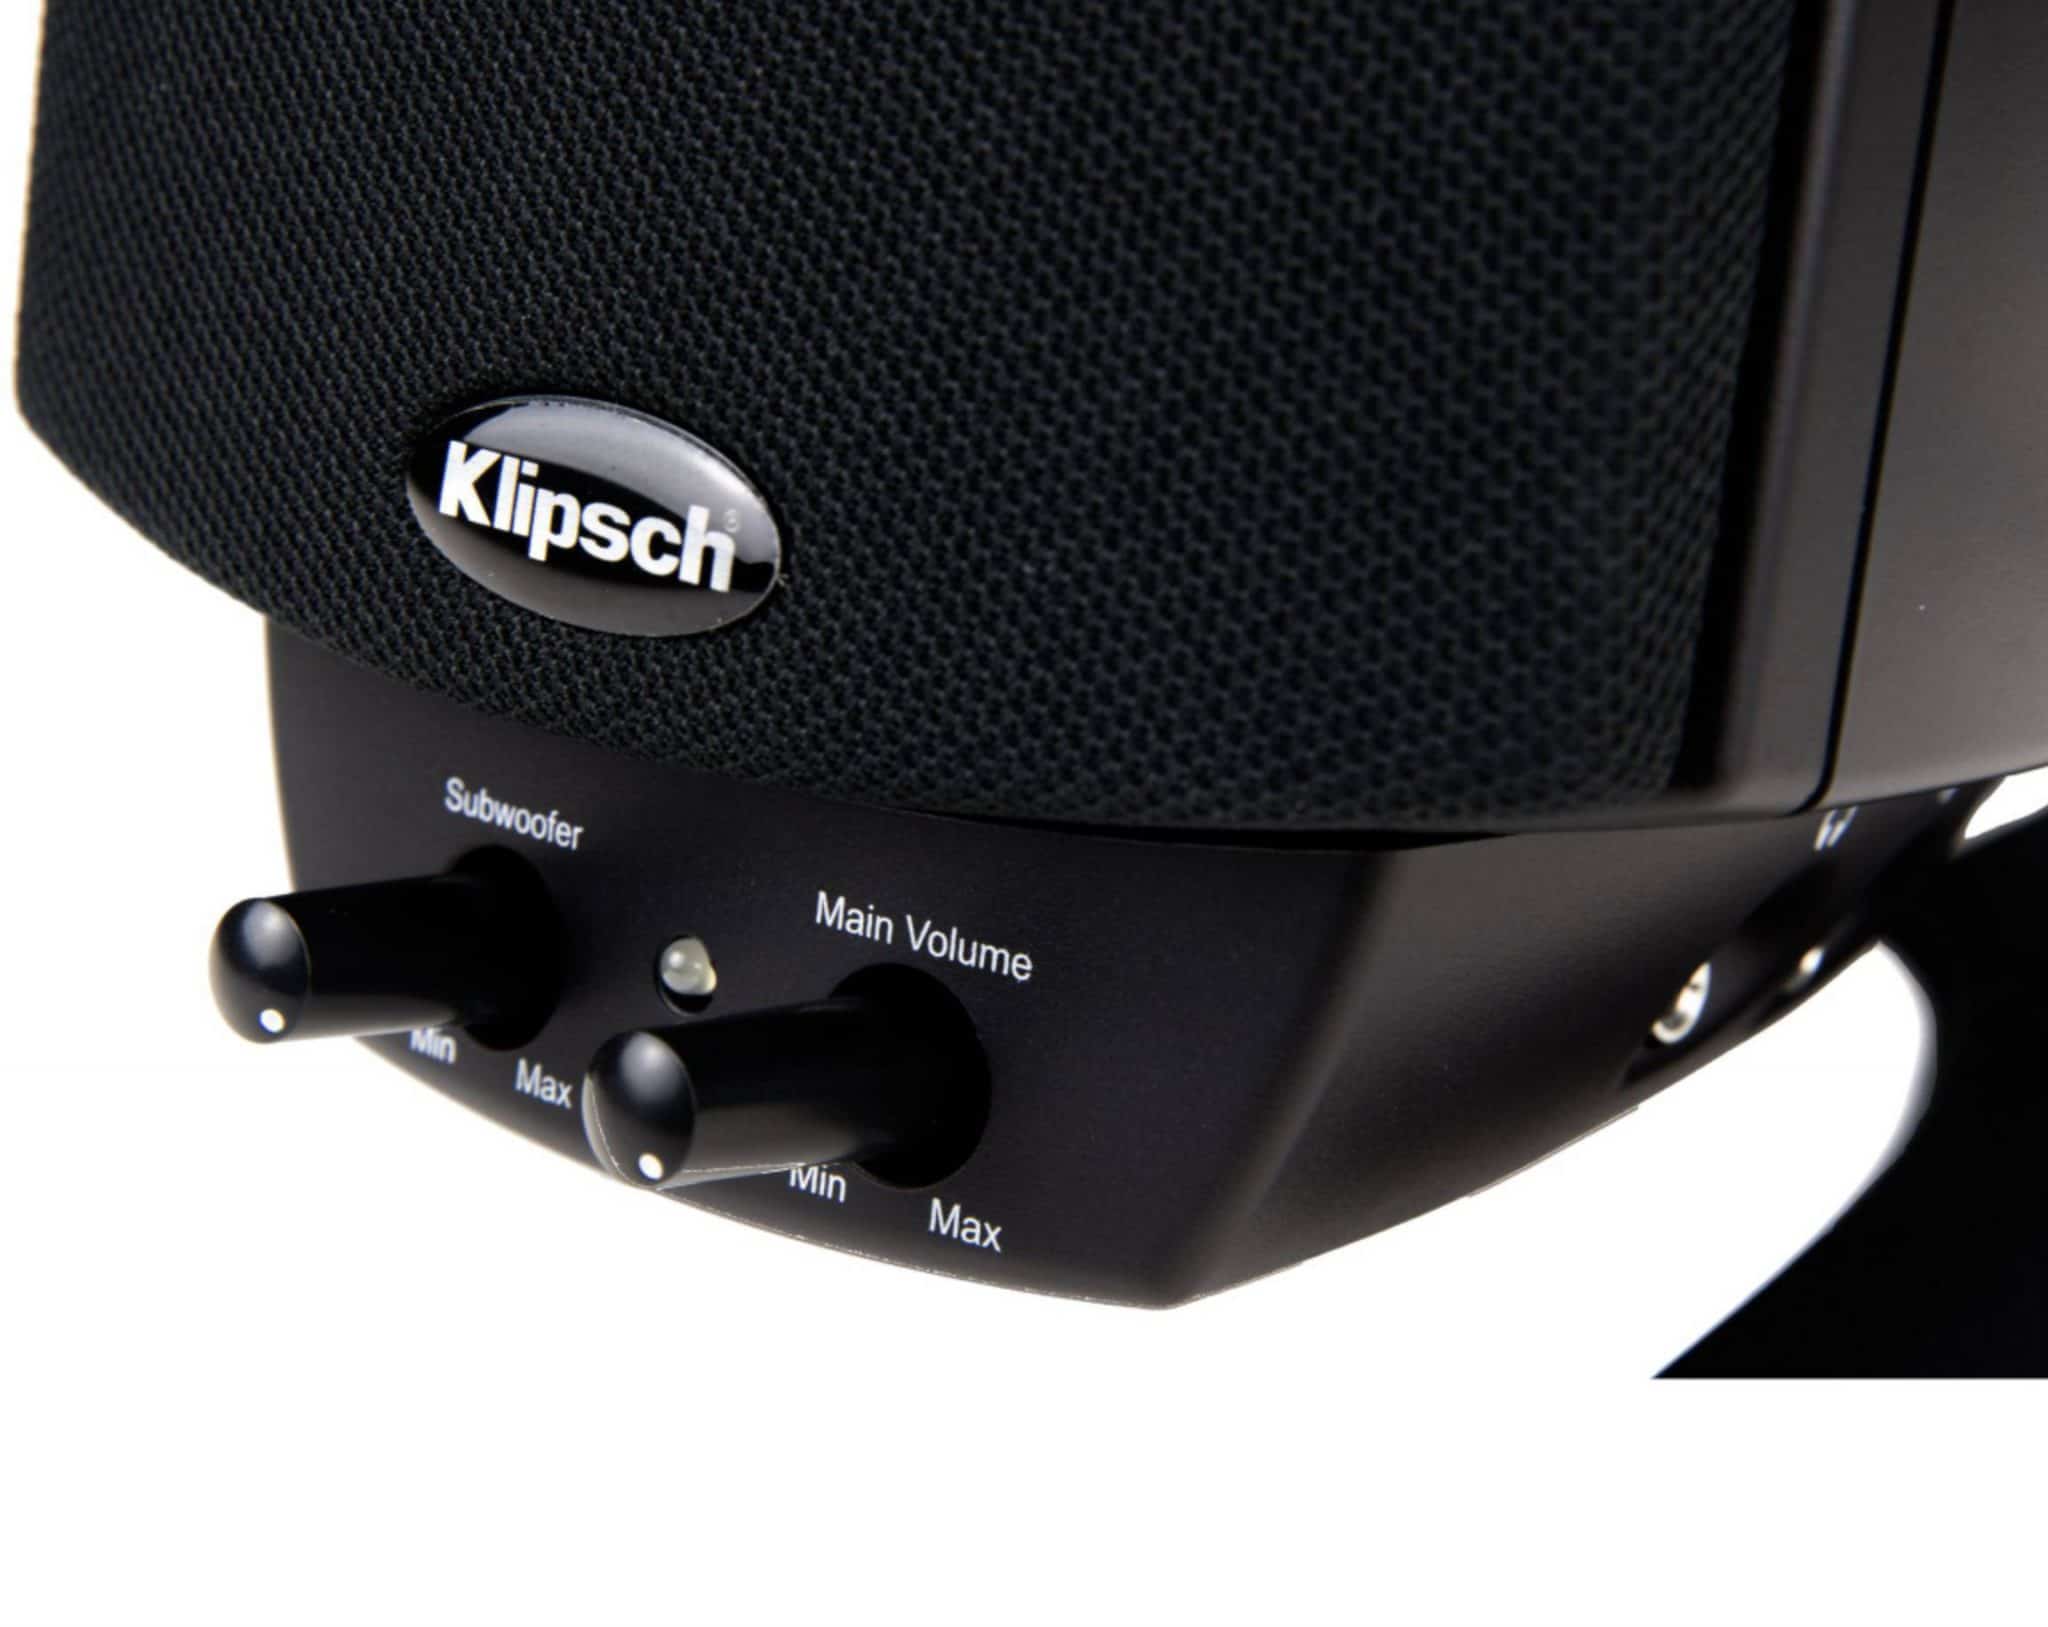 ProMedia 2.1 BT Speakers System From Klipsch